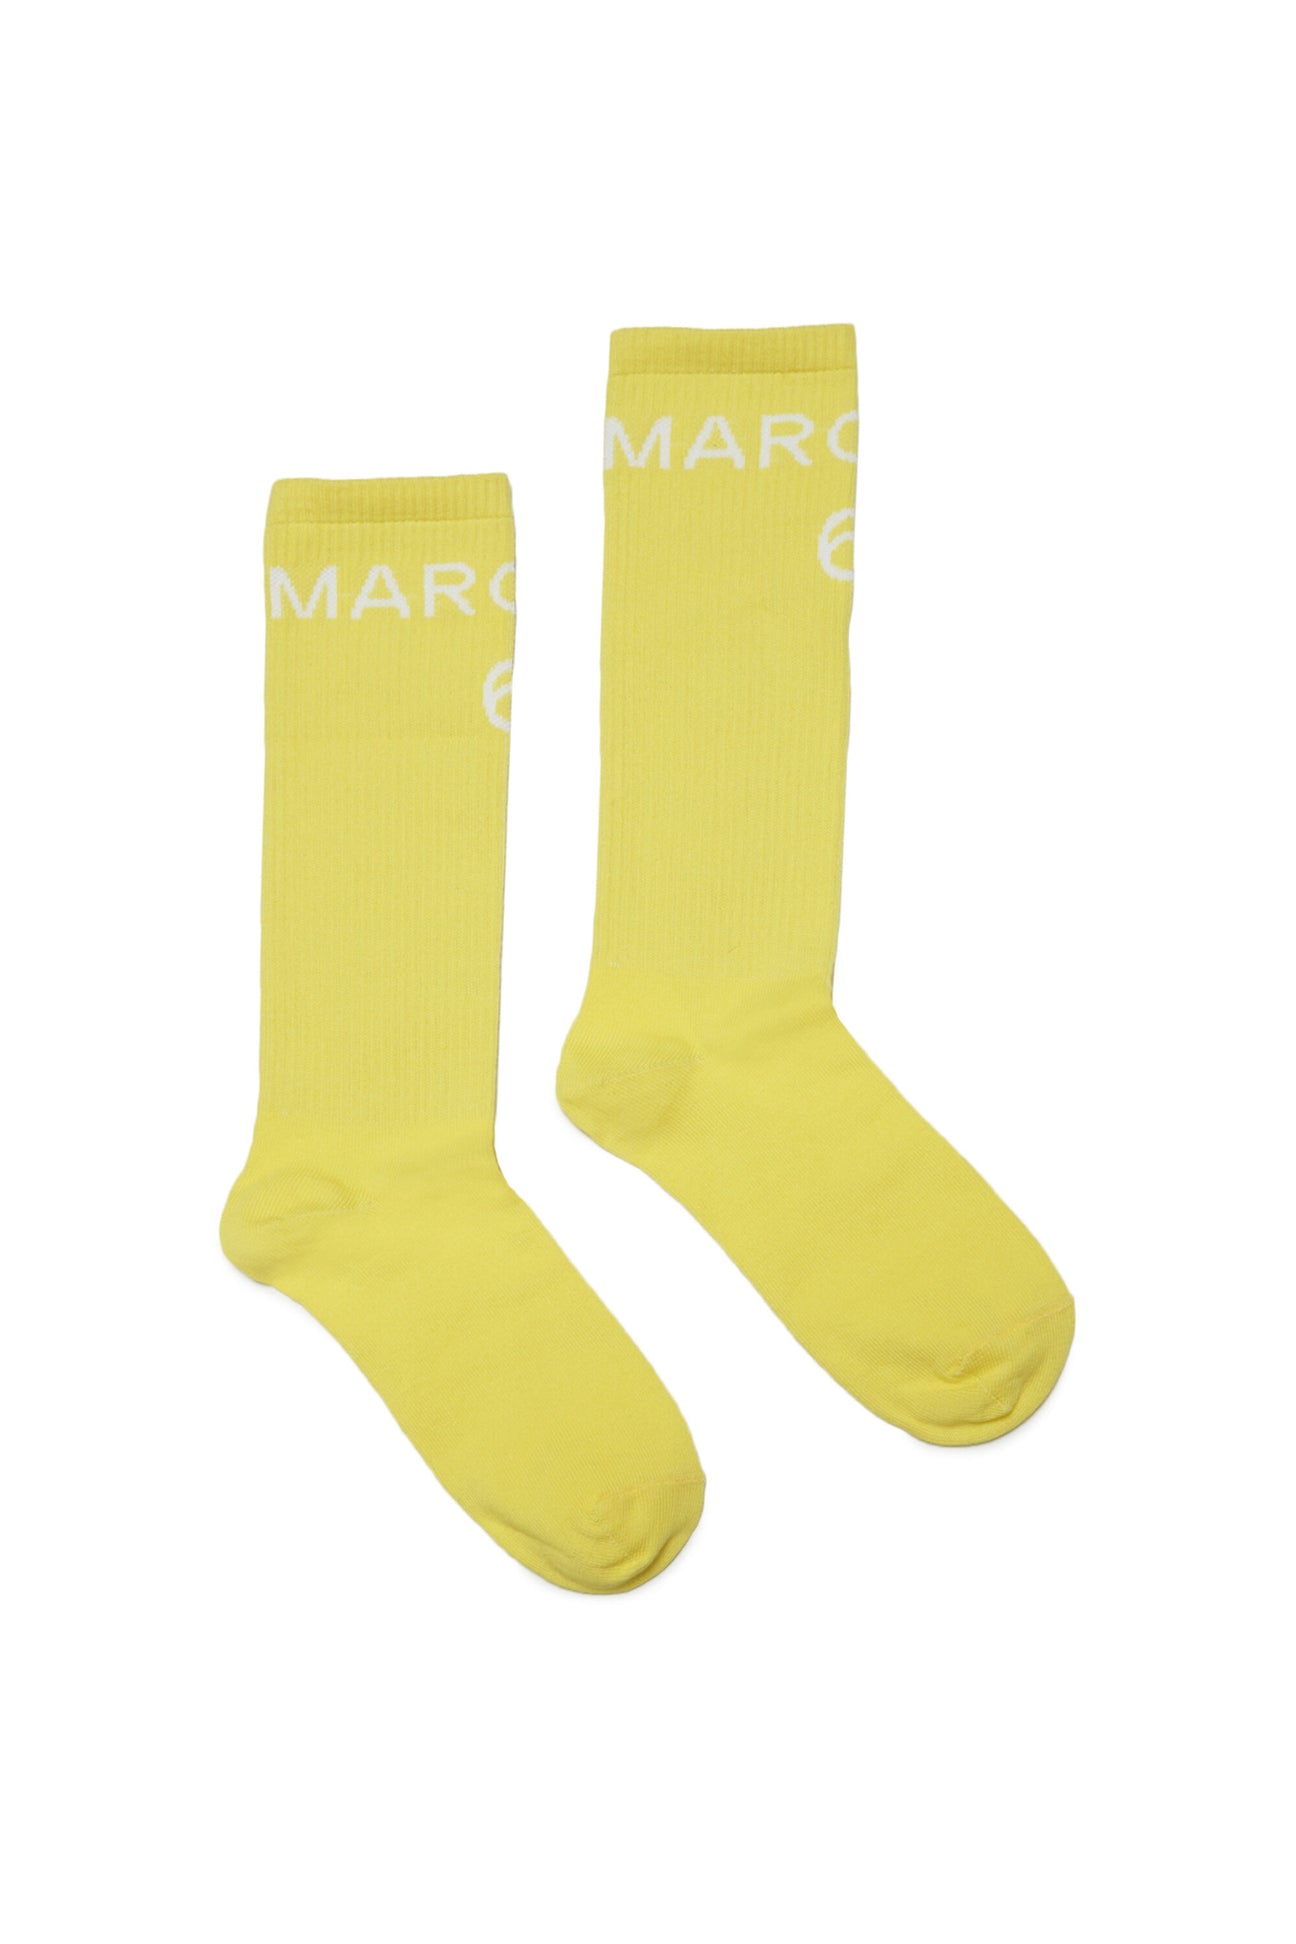 Yellow cotton socks with logo 